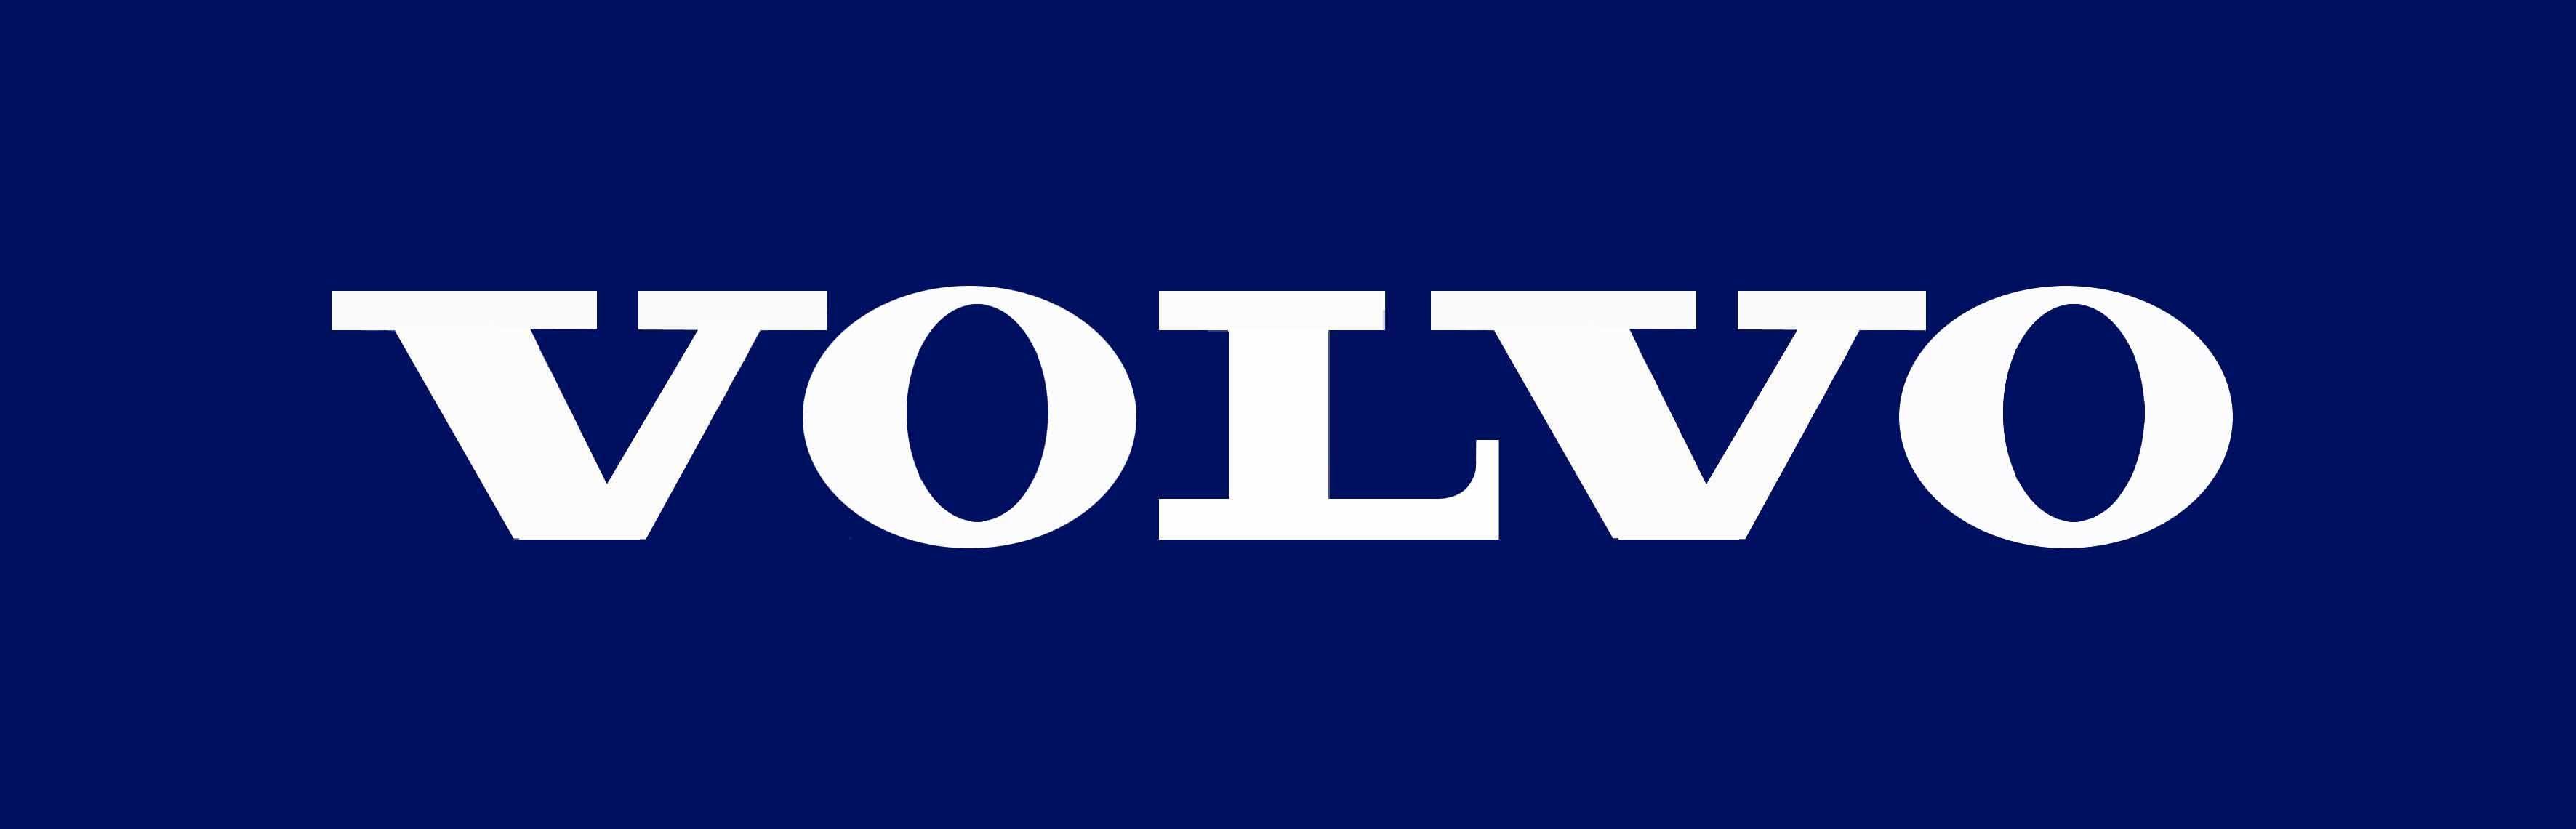 Volvo Logo - Volvo Logo, Volvo Car Symbol Meaning and History | Car Brand Names.com